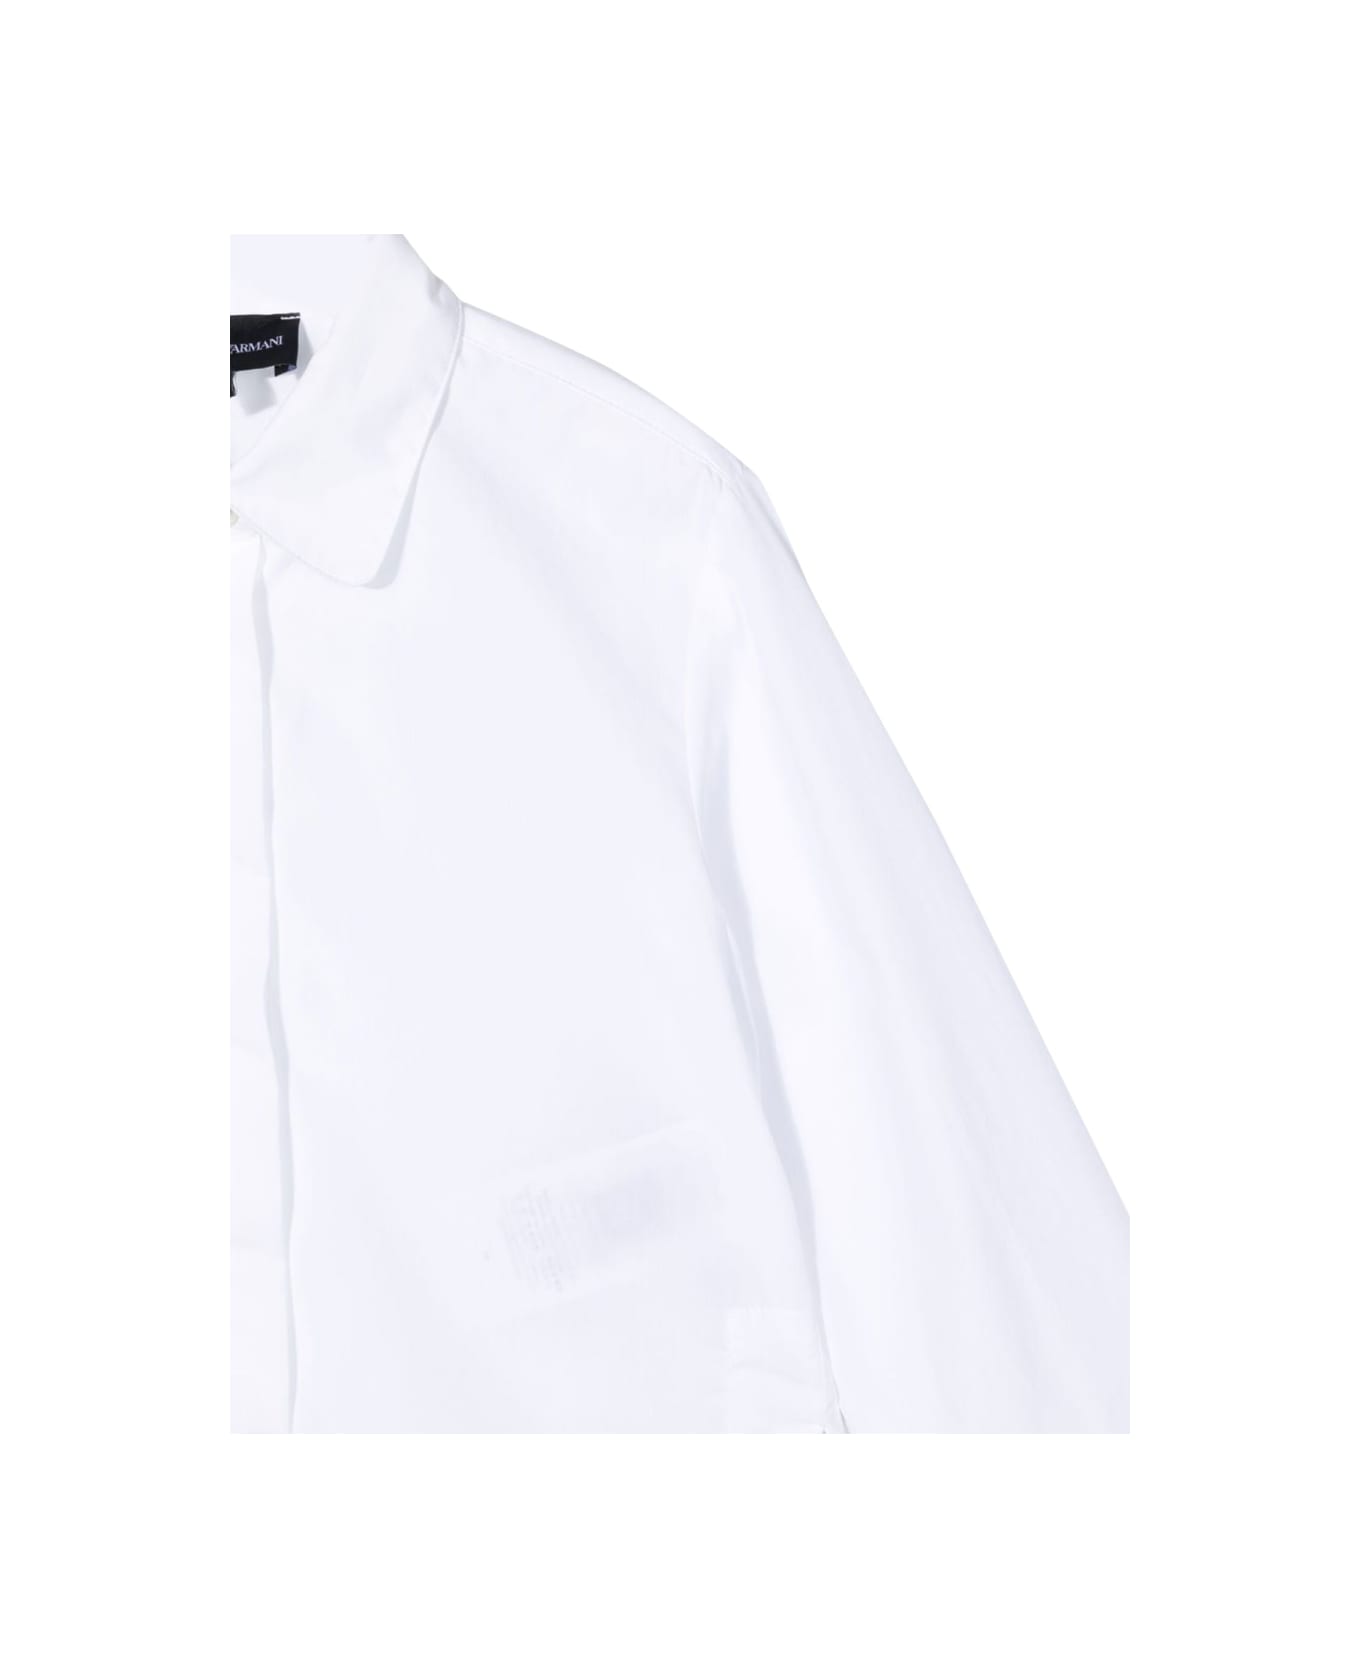 Emporio Armani Shirt M/l - WHITE